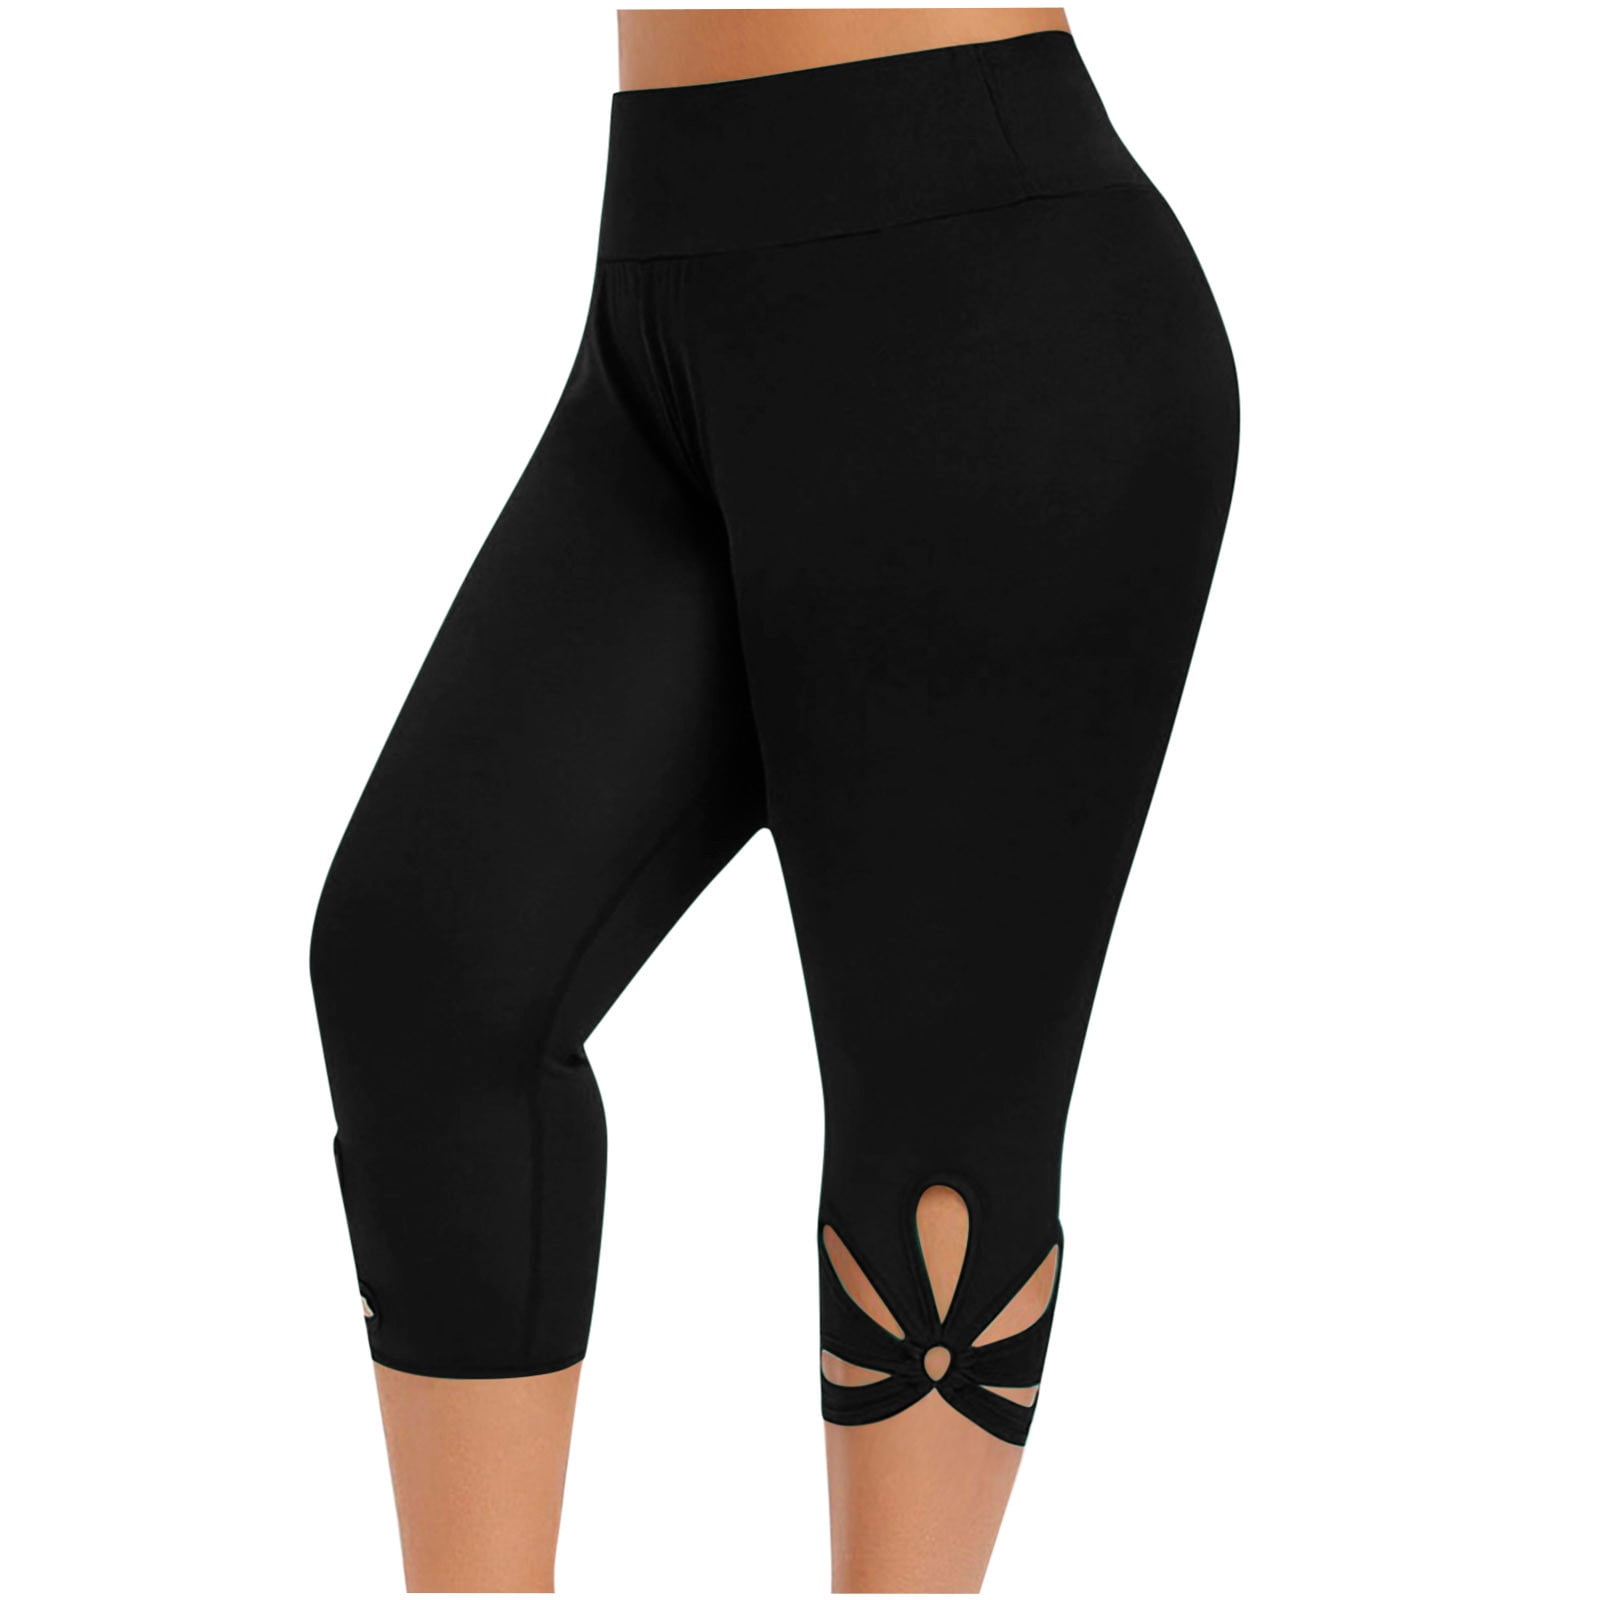 DeHolifer Women's Capri Yoga Pants with Pockets Workout Out Leggings  Stretch Waist Button Pocket Yoga Gym Cropped Trousers Blue XL 